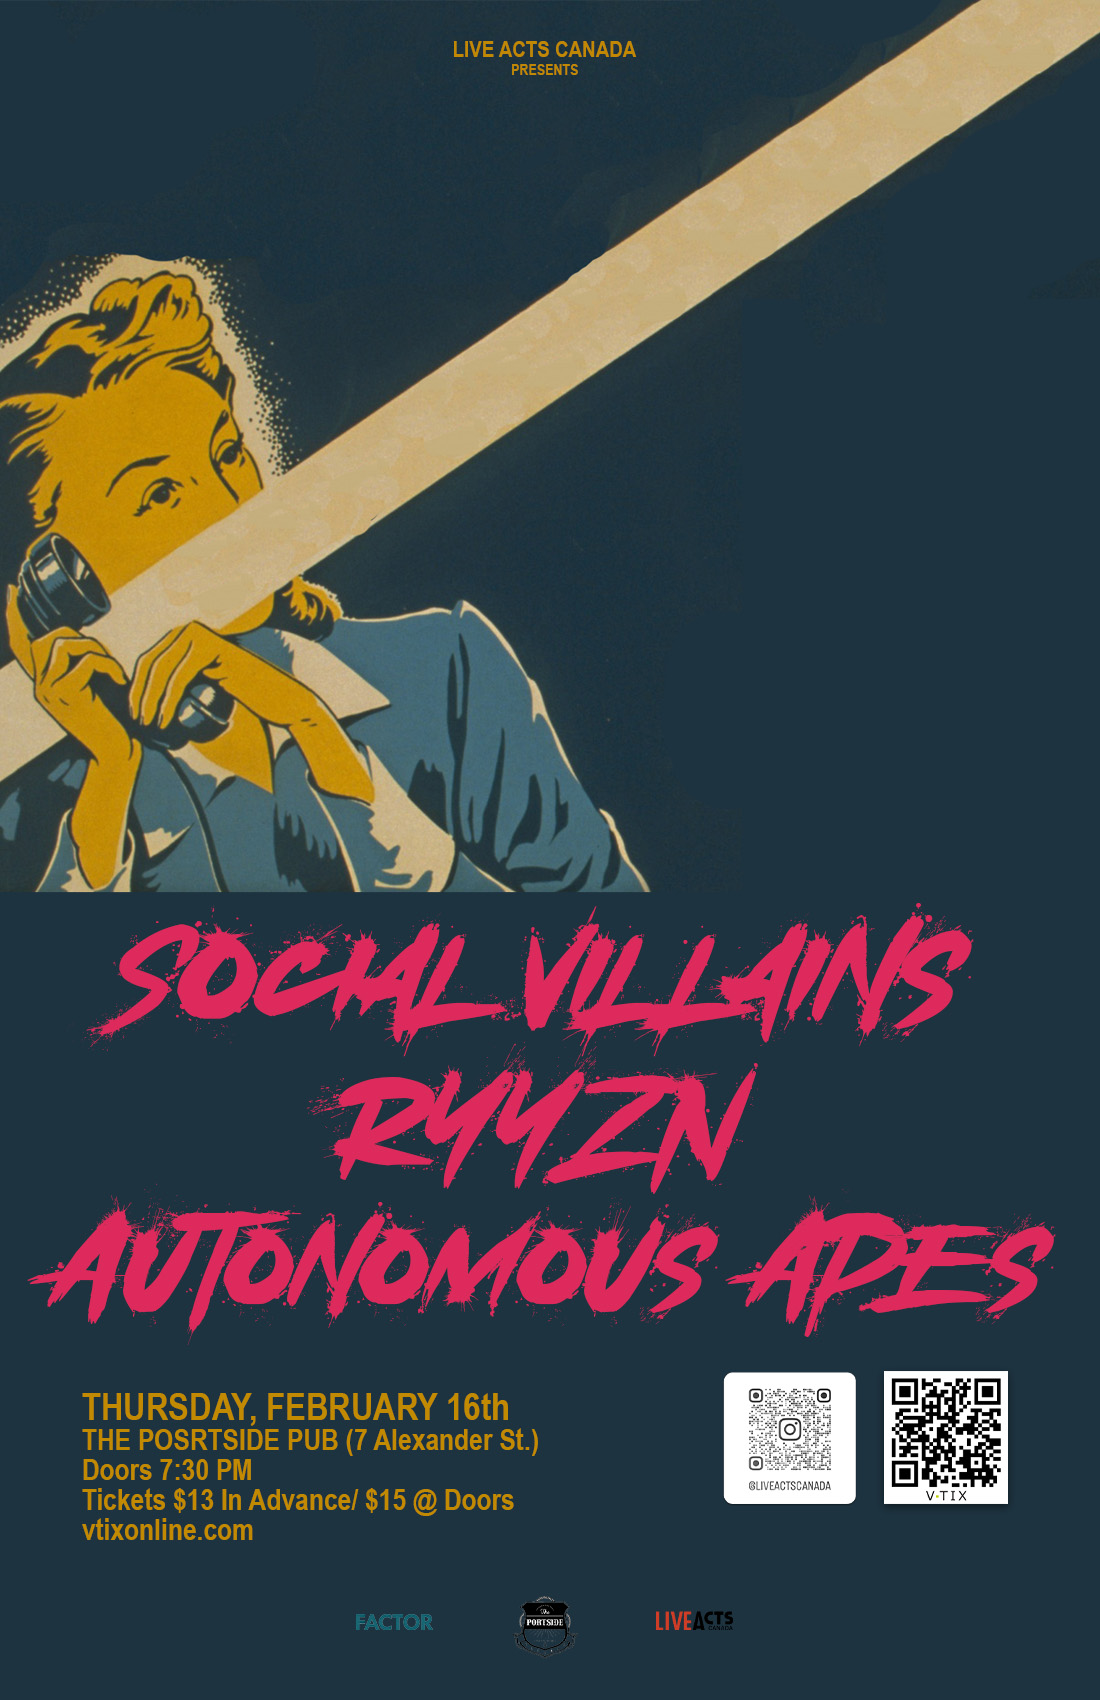 Social Villains with Special Guests RYYZN and Autonomous Apes